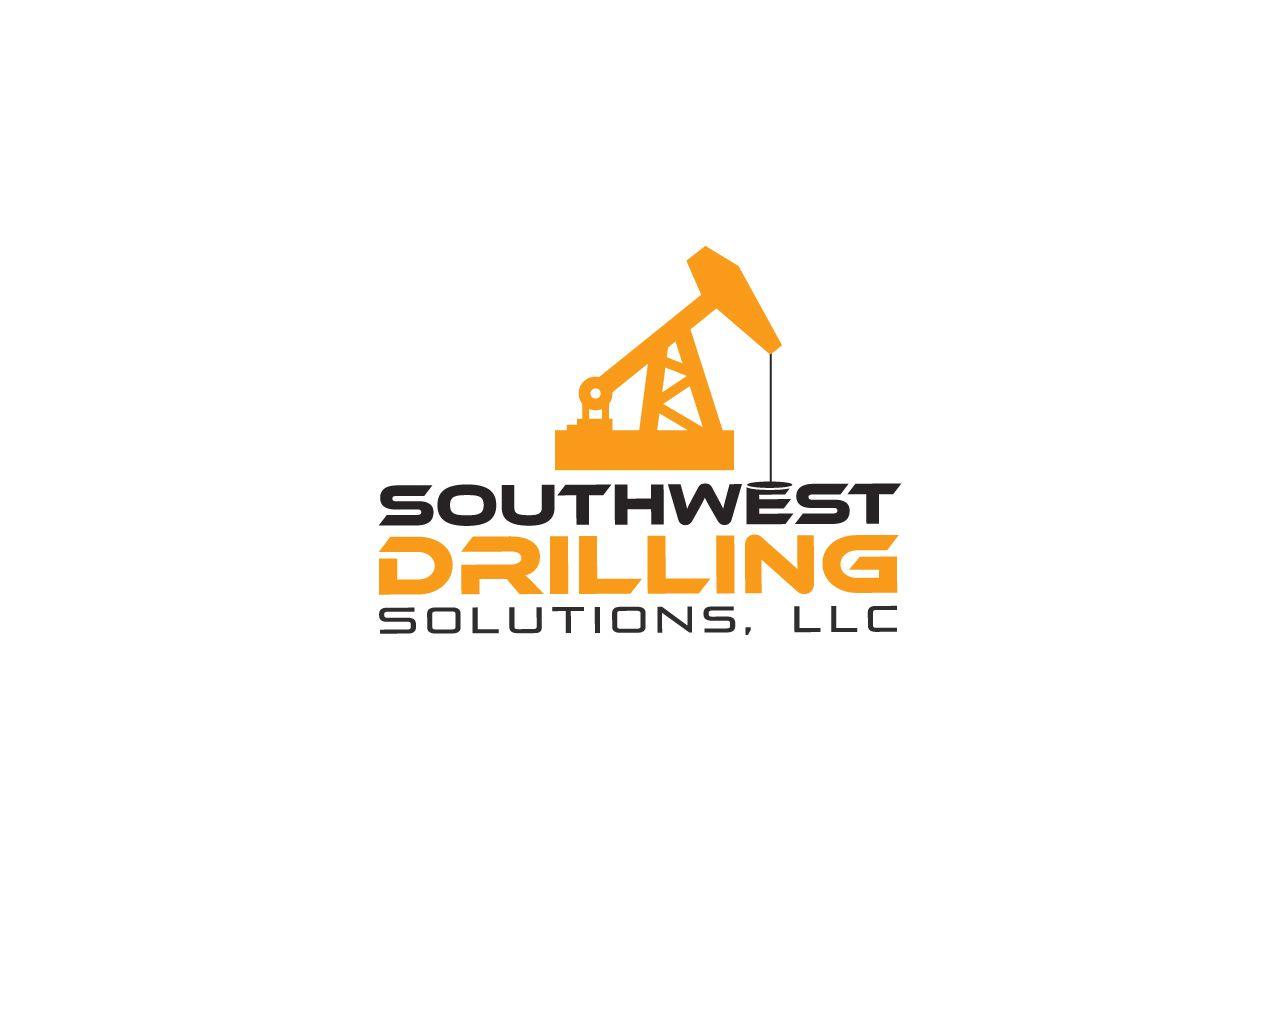 Southwest Company Logo - Elegant, Playful, Oil And Gas Logo Design for Southwest Drilling